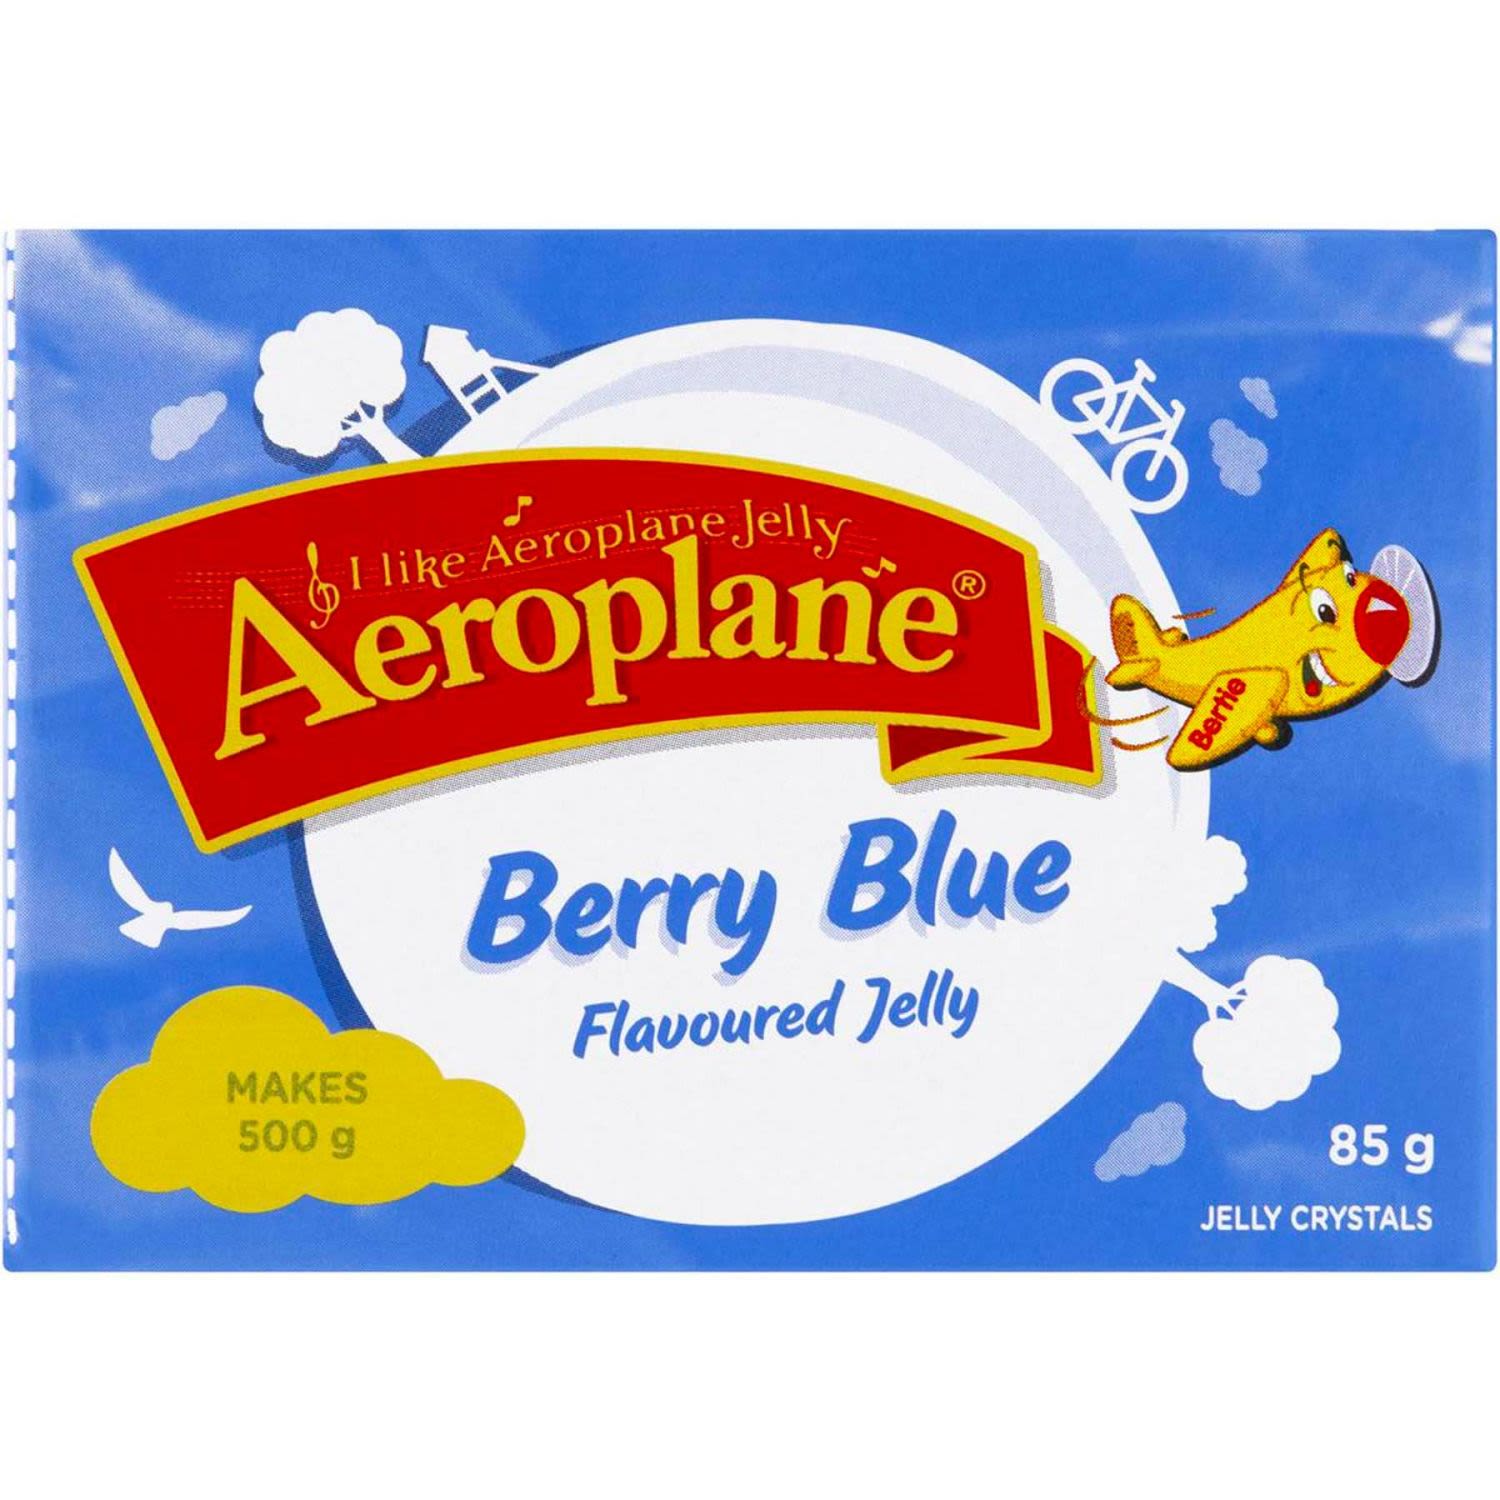 Aeroplane Jelly Berry Blue, 85 Gram